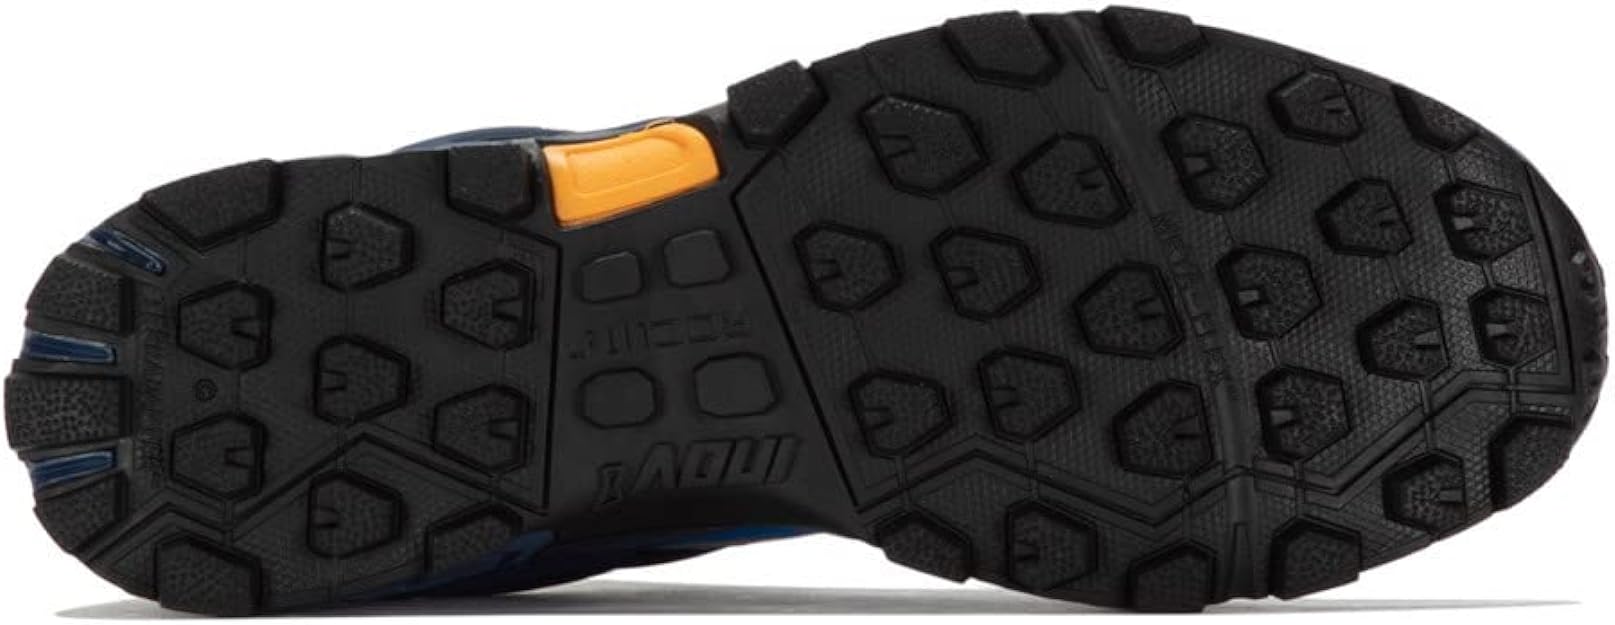 Inov-8 Men's Roclite Ultra G 320 Trail Running Shoes